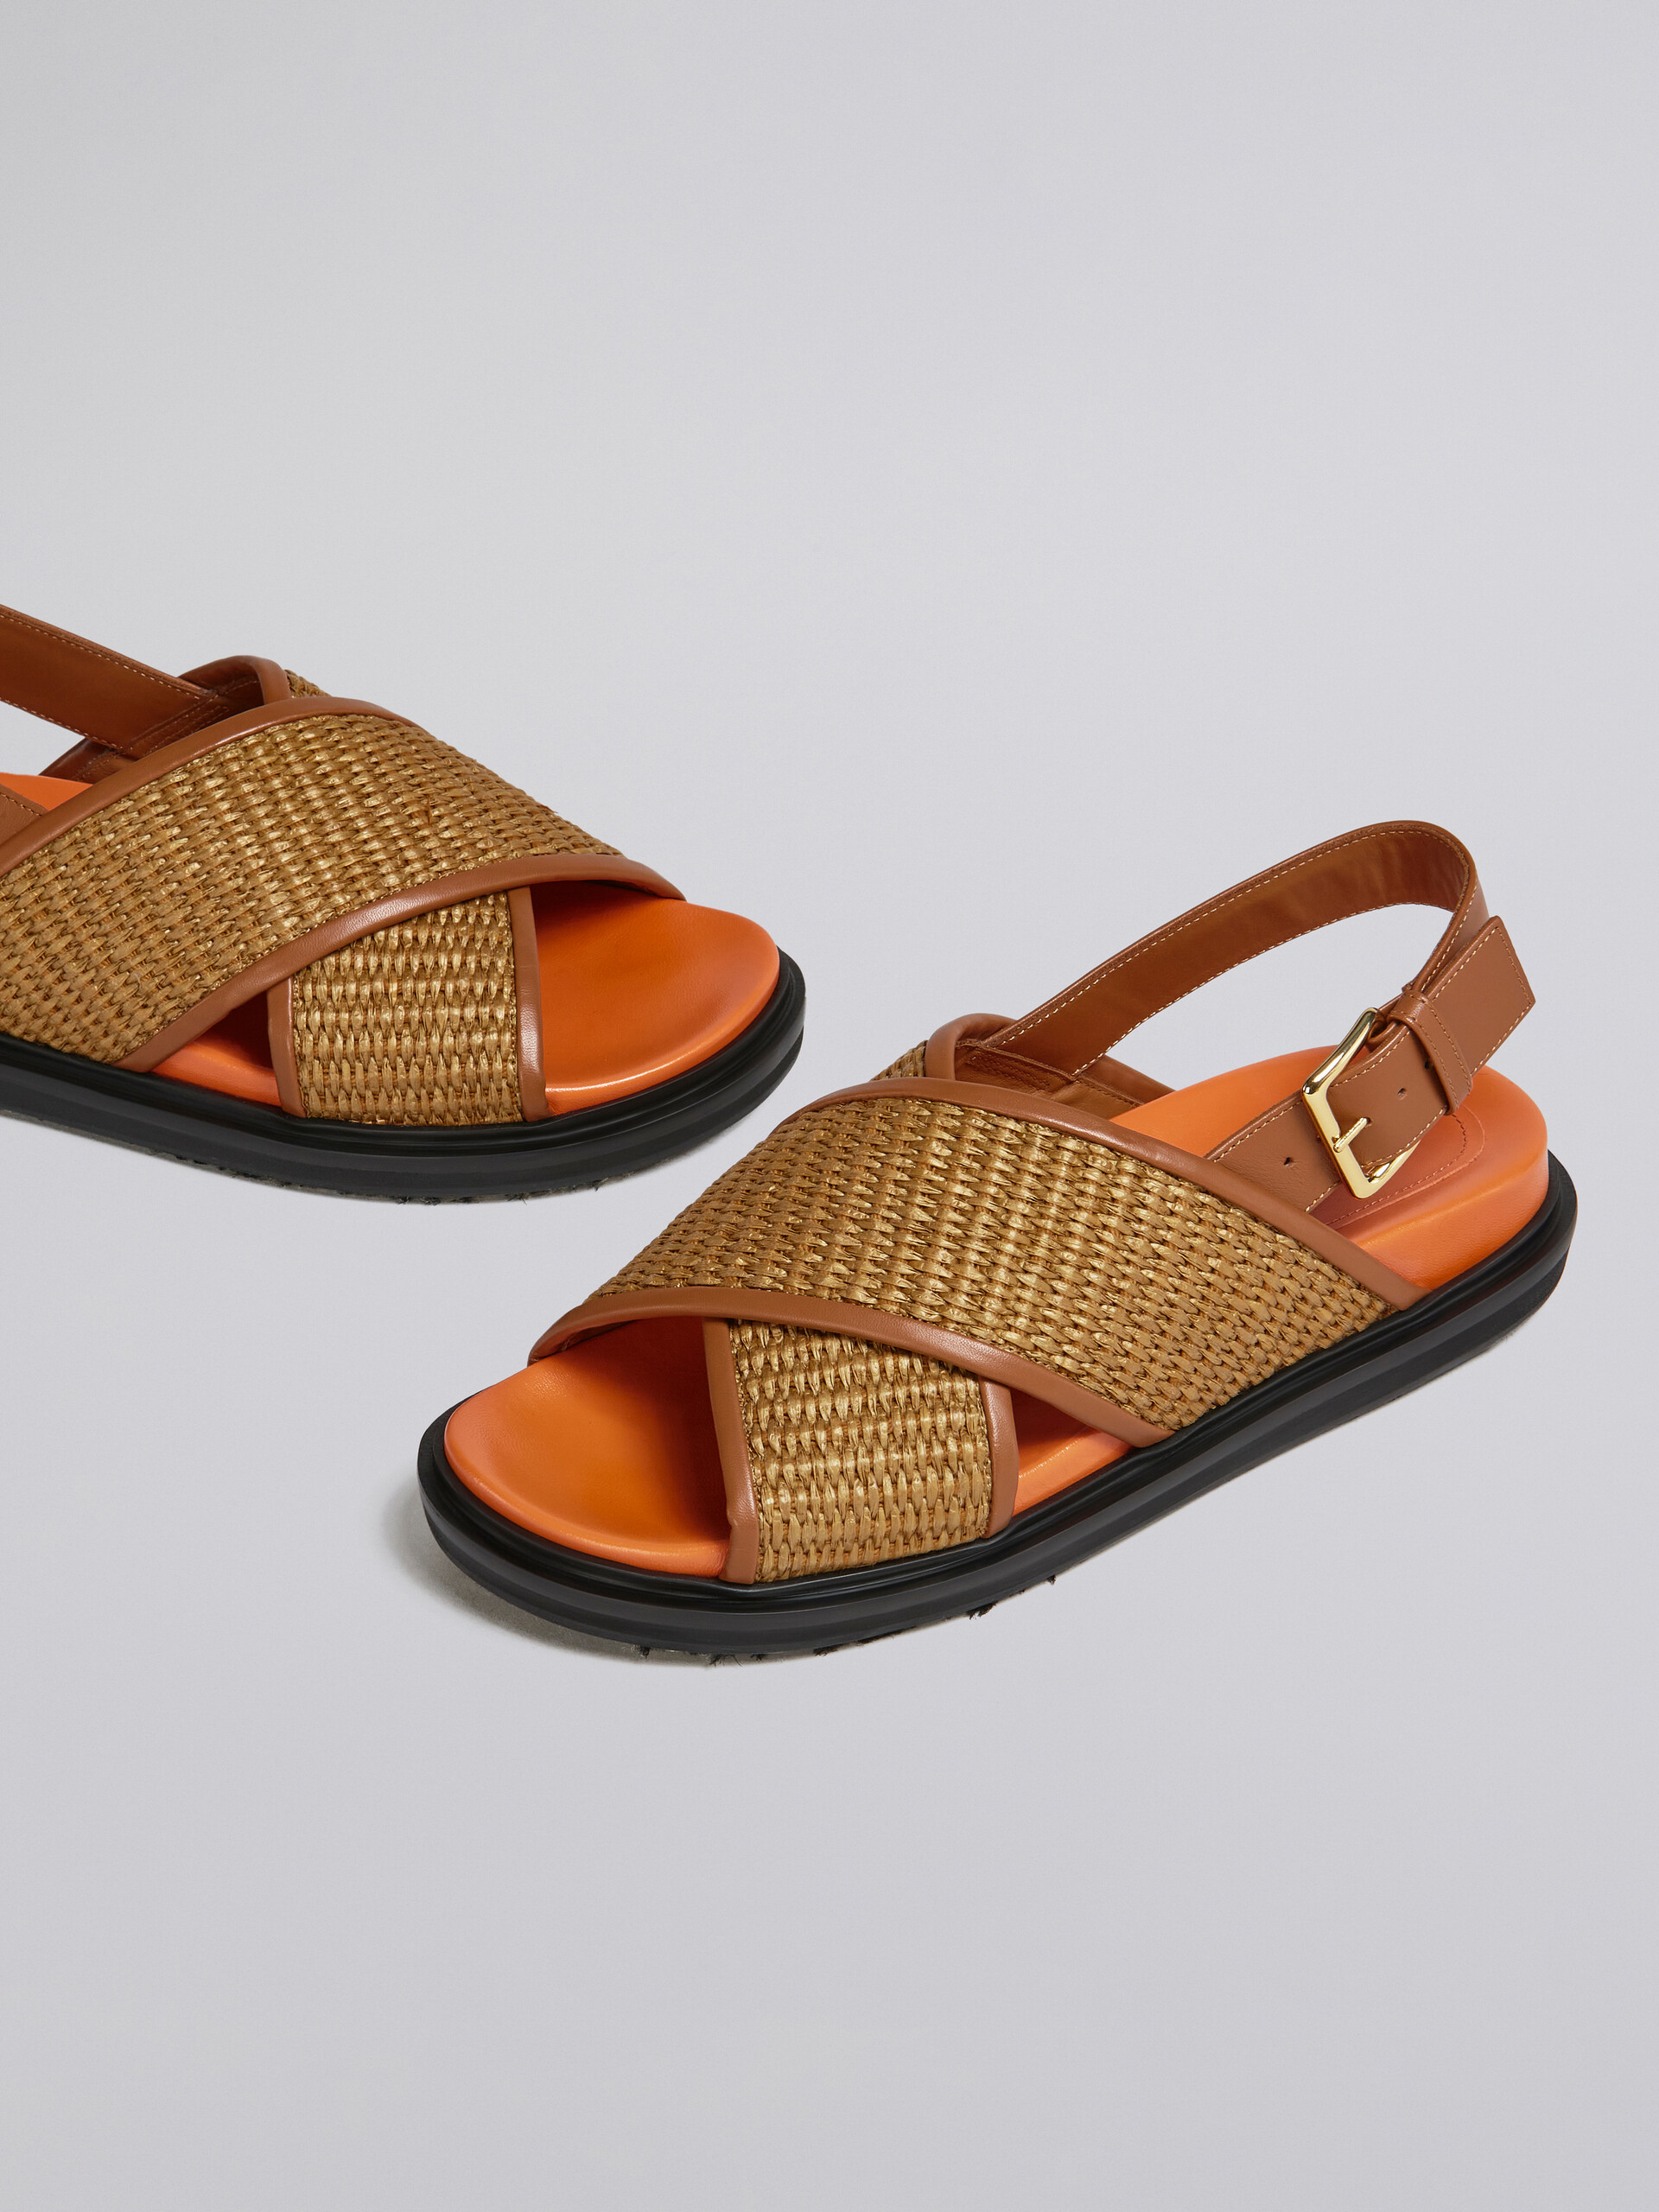 Fußbett-Sandalen aus braunem Leder und Material in Bast-Optik - Sandalen - Image 5